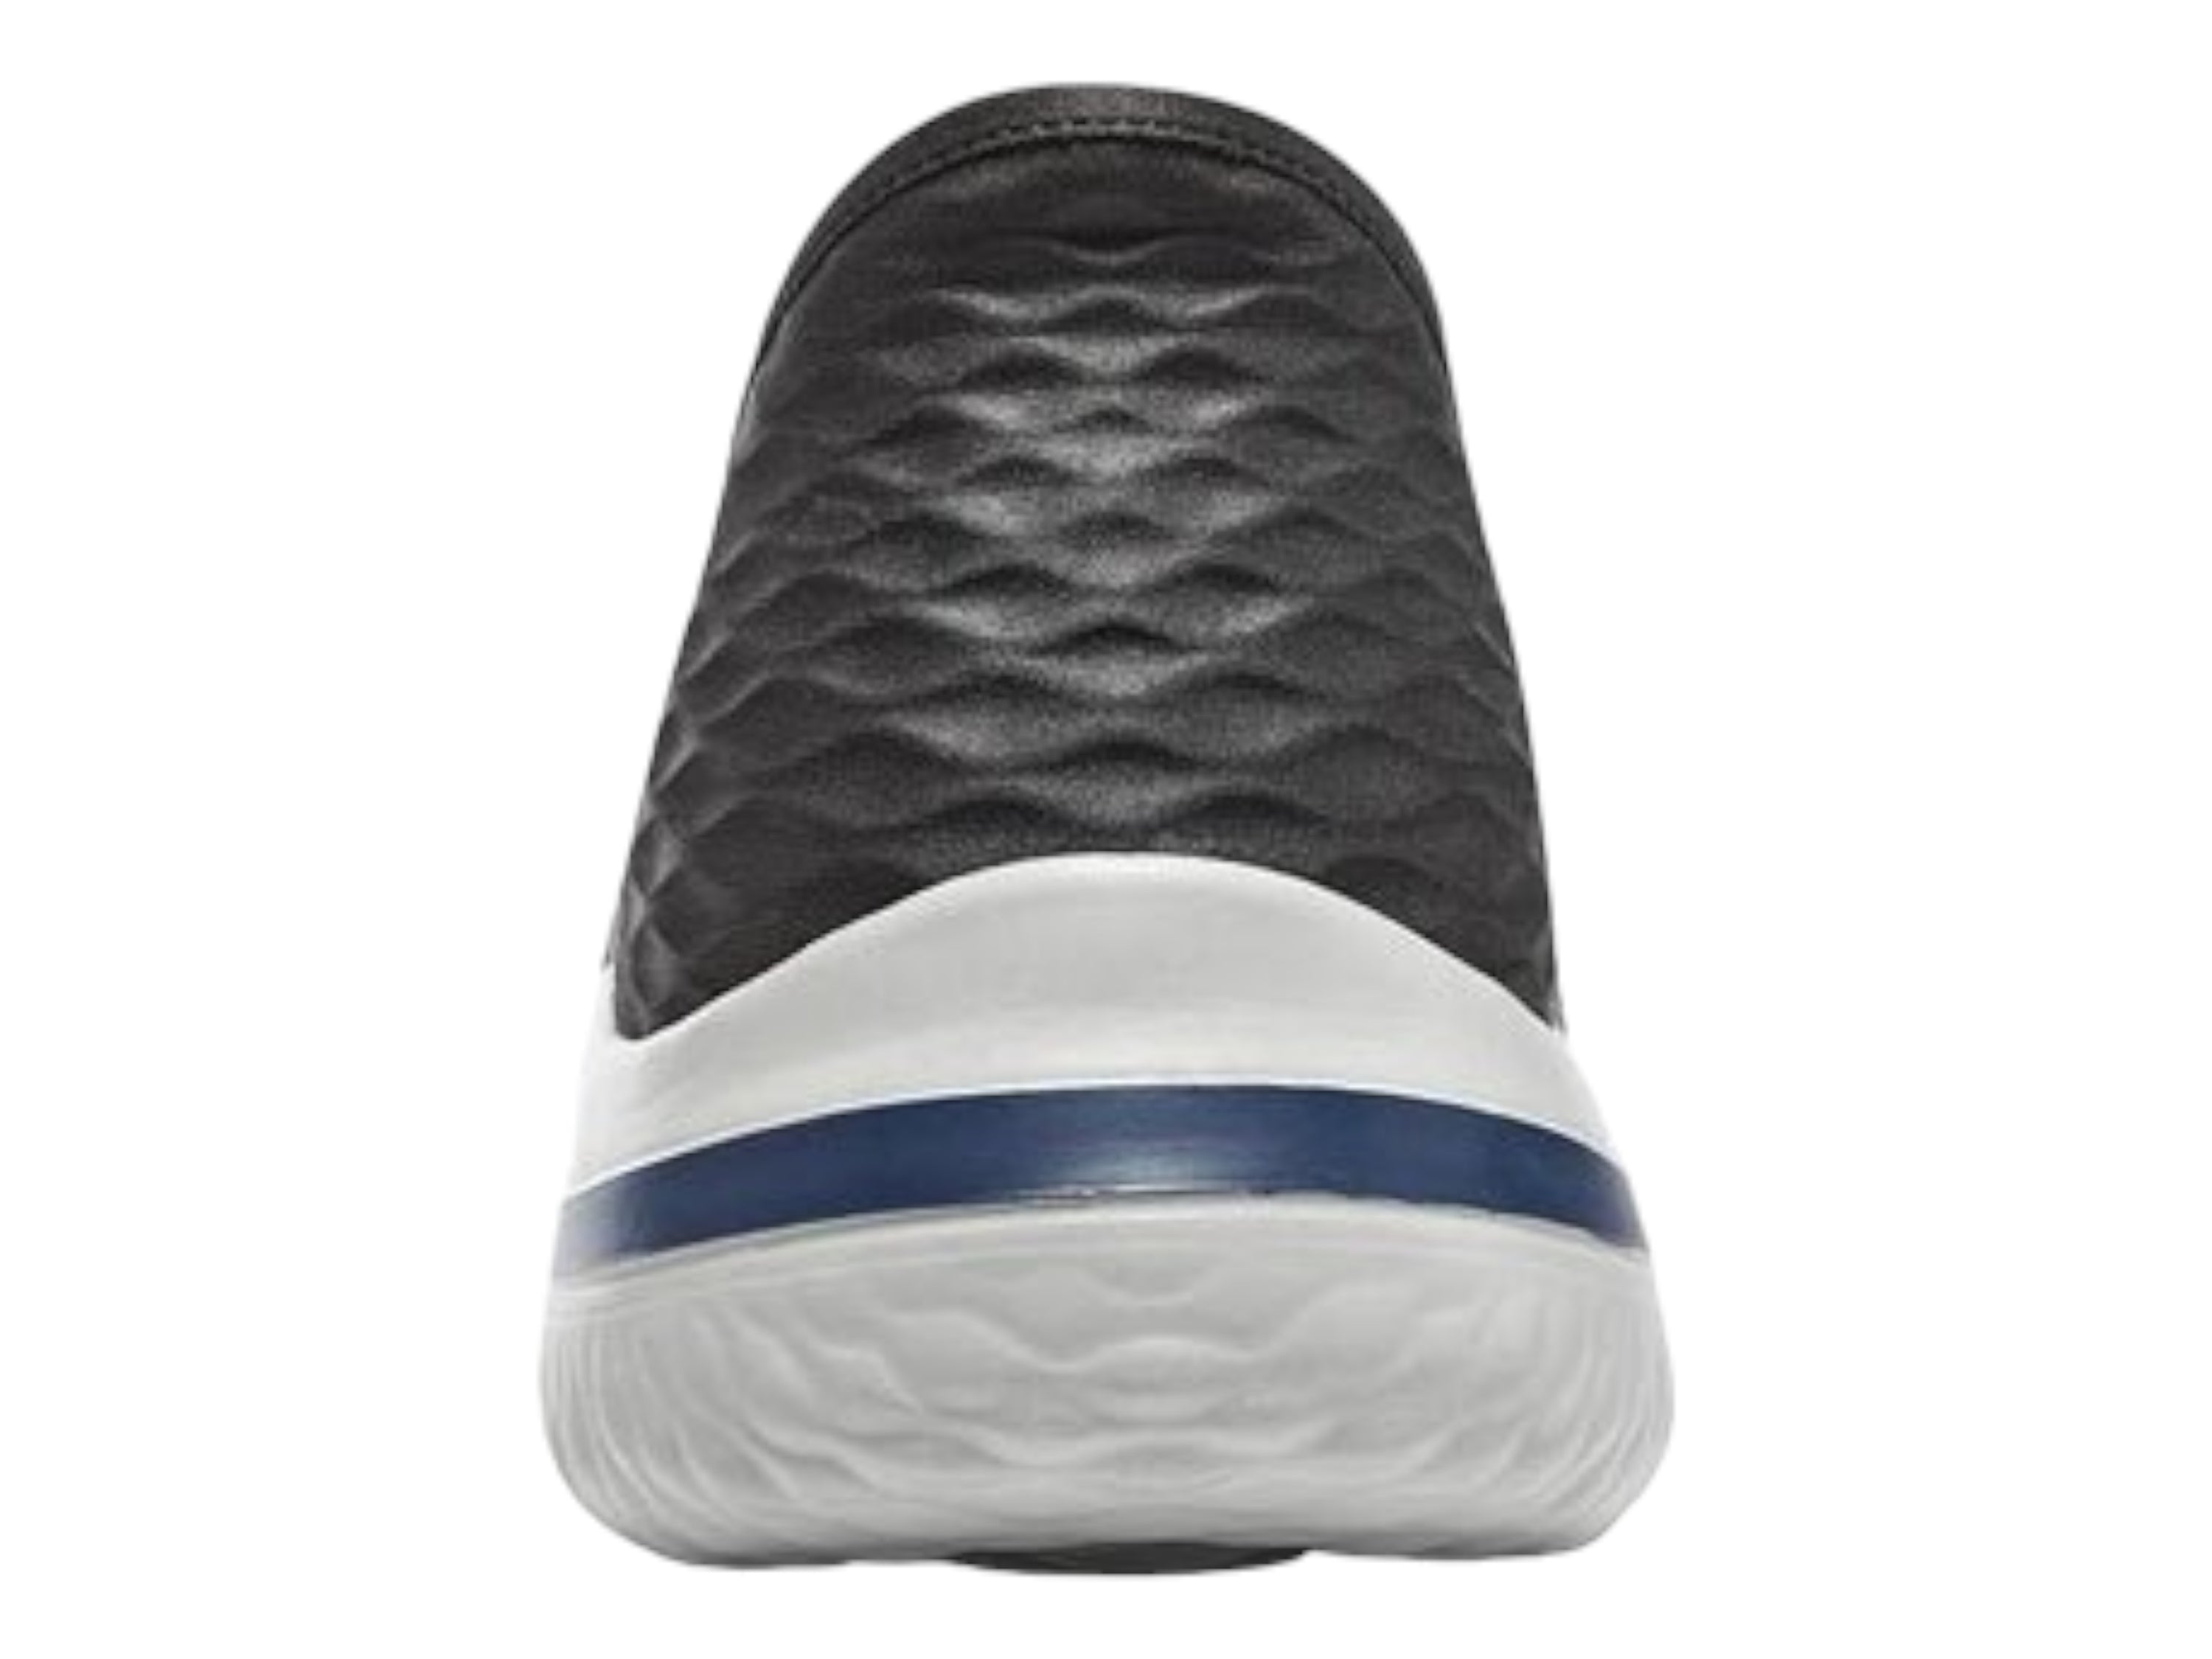 Skechers Delson 3.0 Cabrino Sneaker - Men's